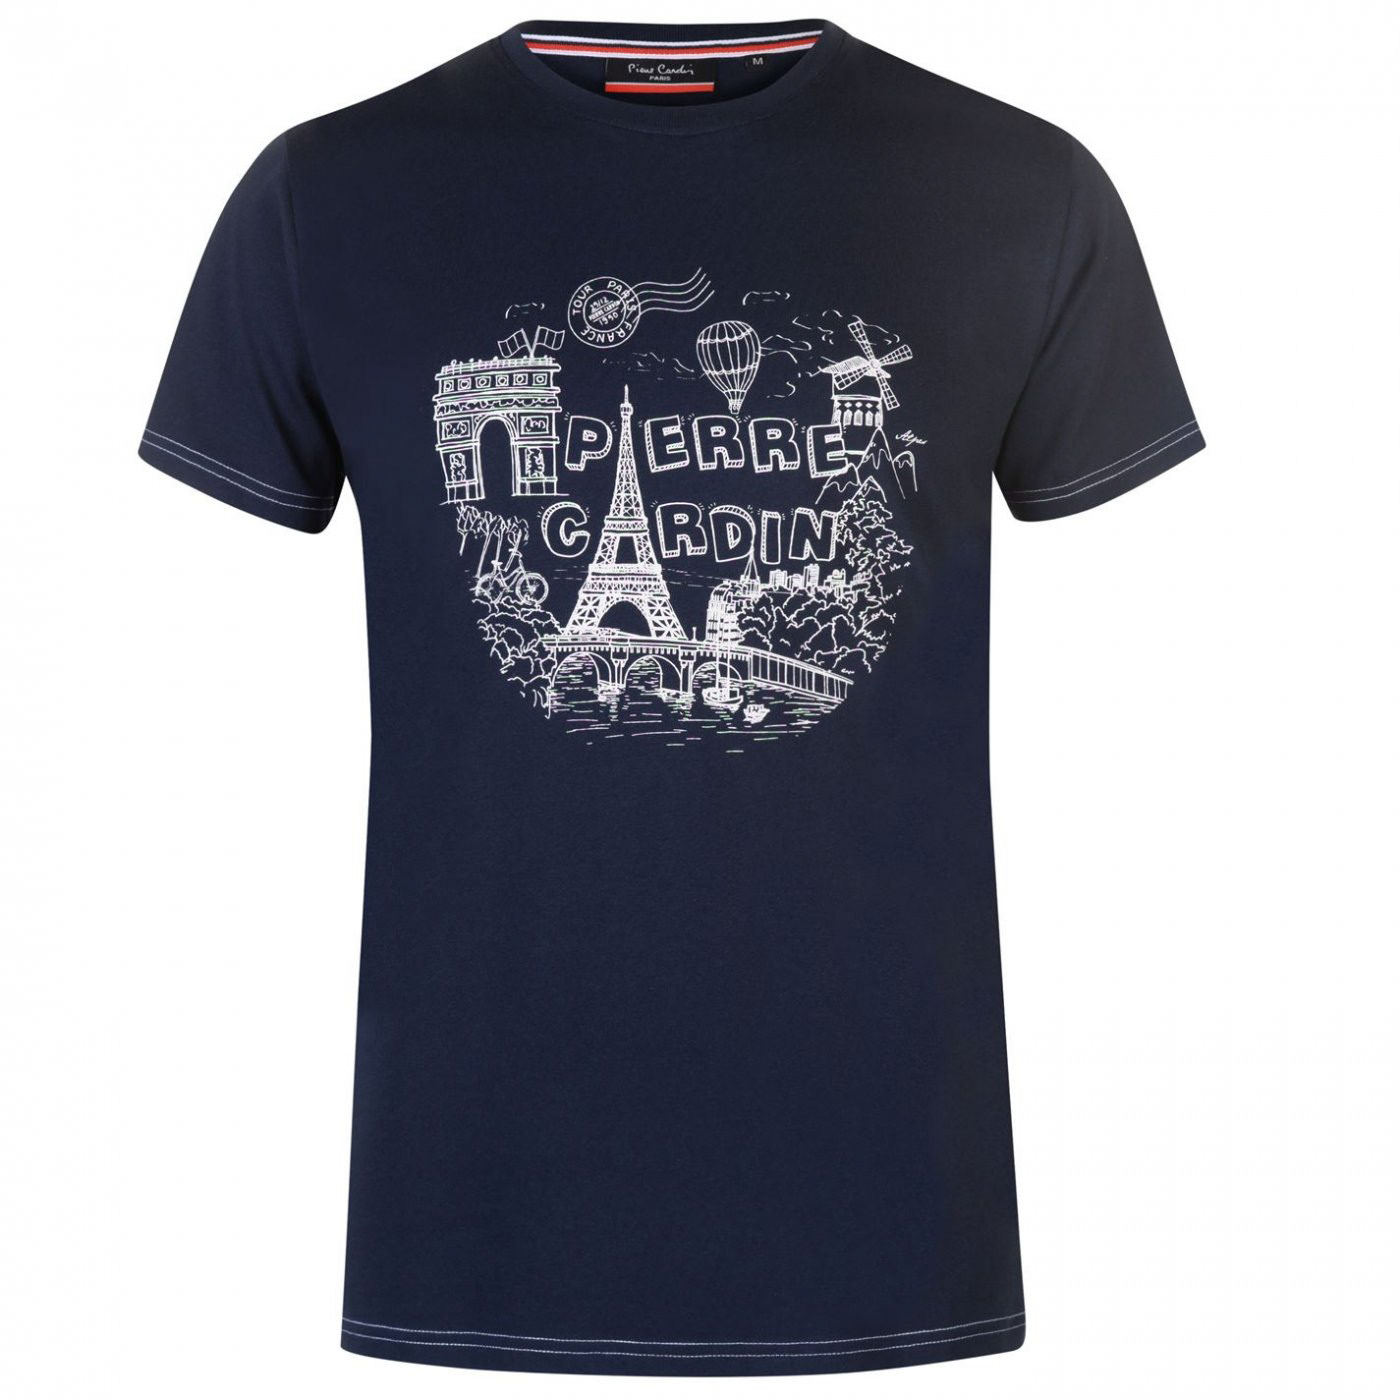 Menswear Graphic T-shirt for Pierre Cardin on Behance